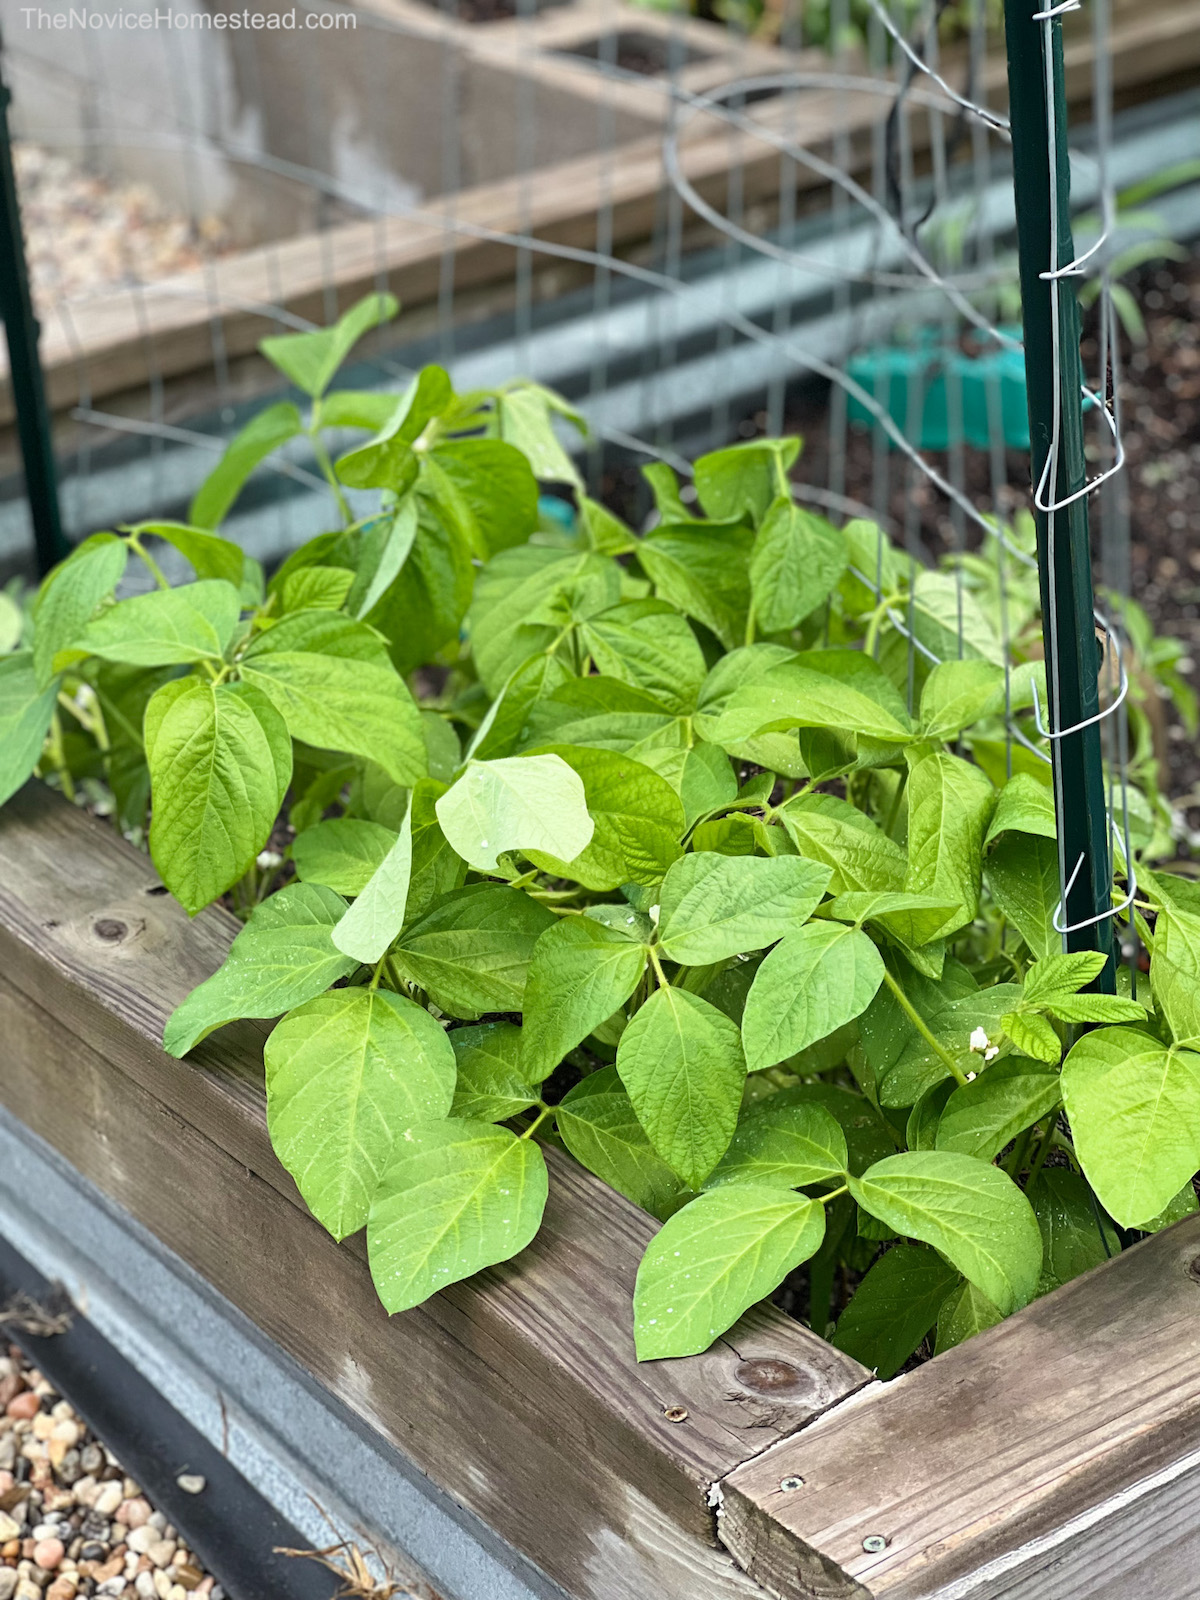 soybean plants in a raised bed garden